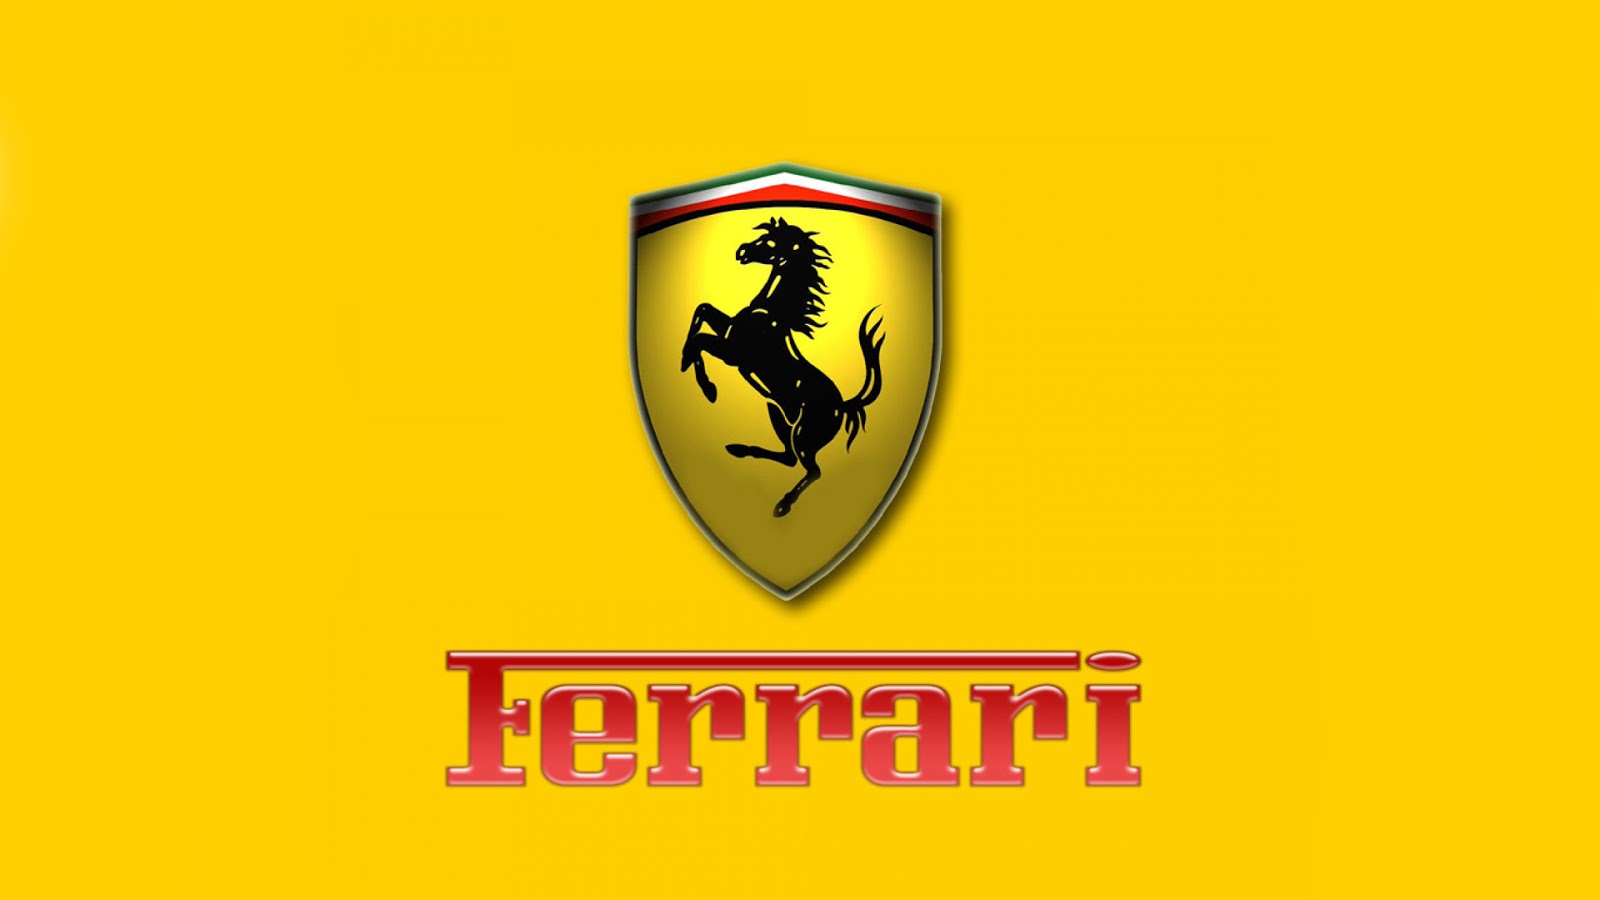 Ferrari Logo Yellow Background High Definition Wallpaper Free